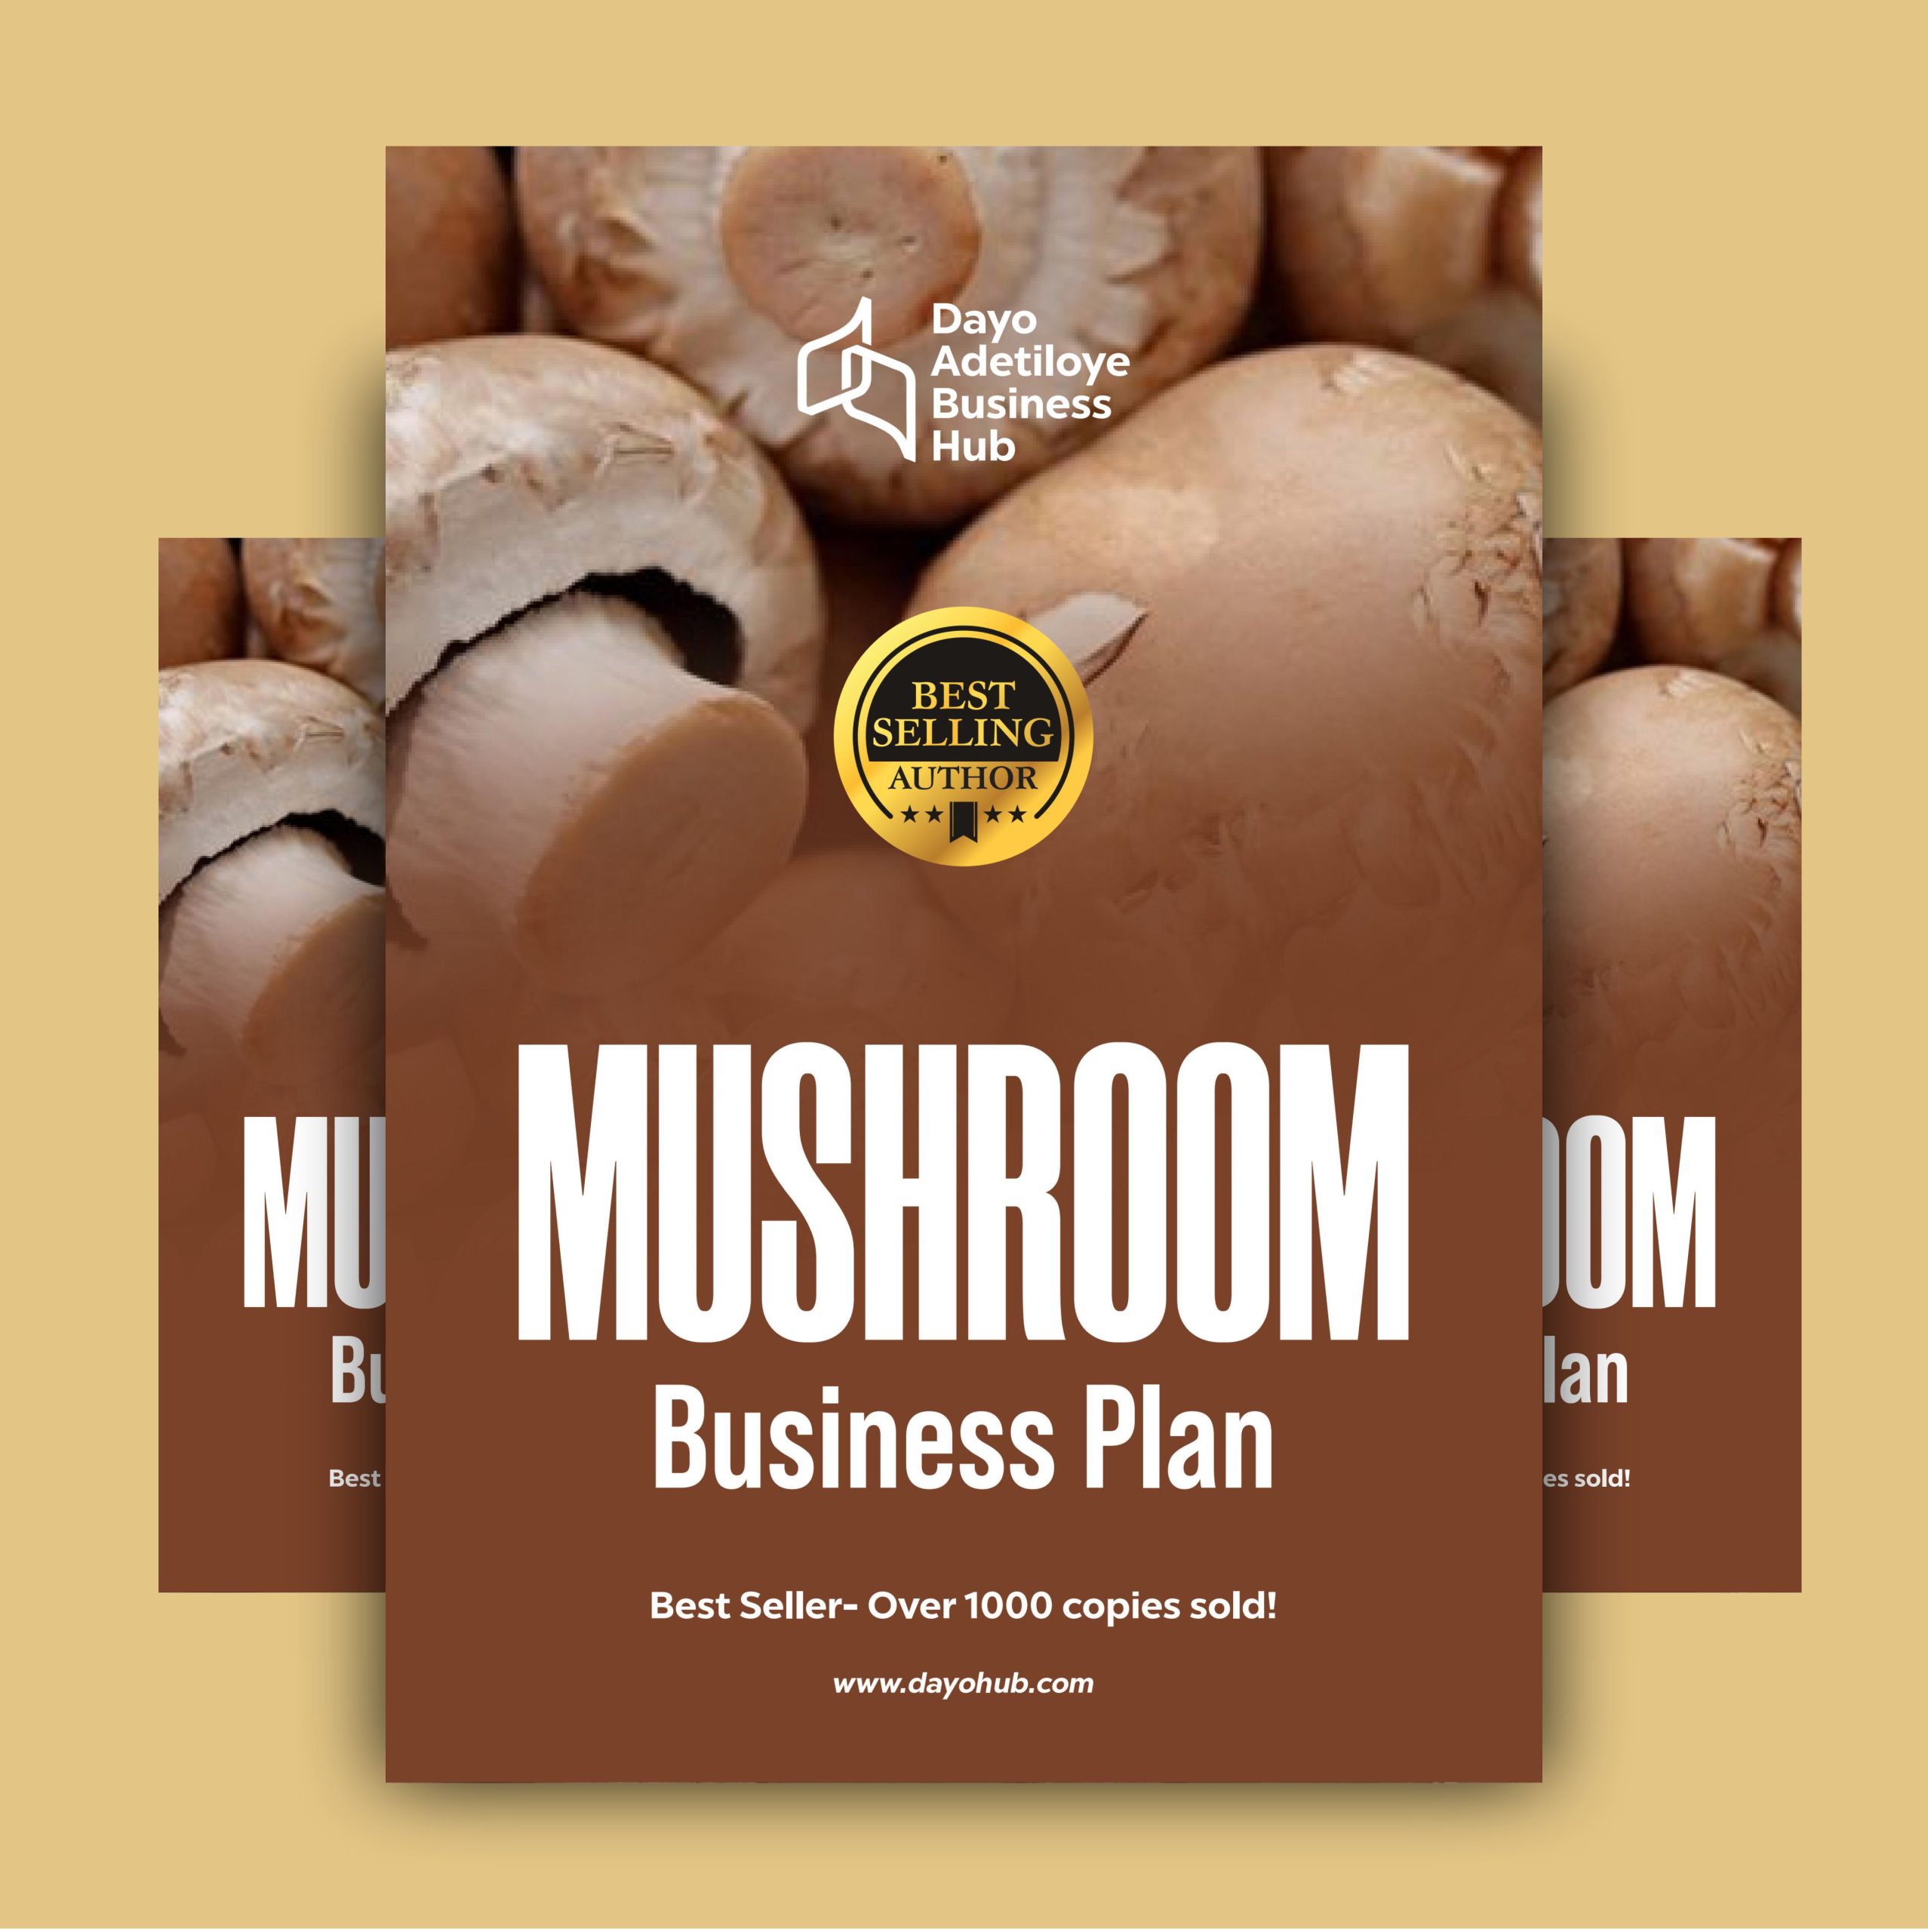 executive summary of mushroom business plan